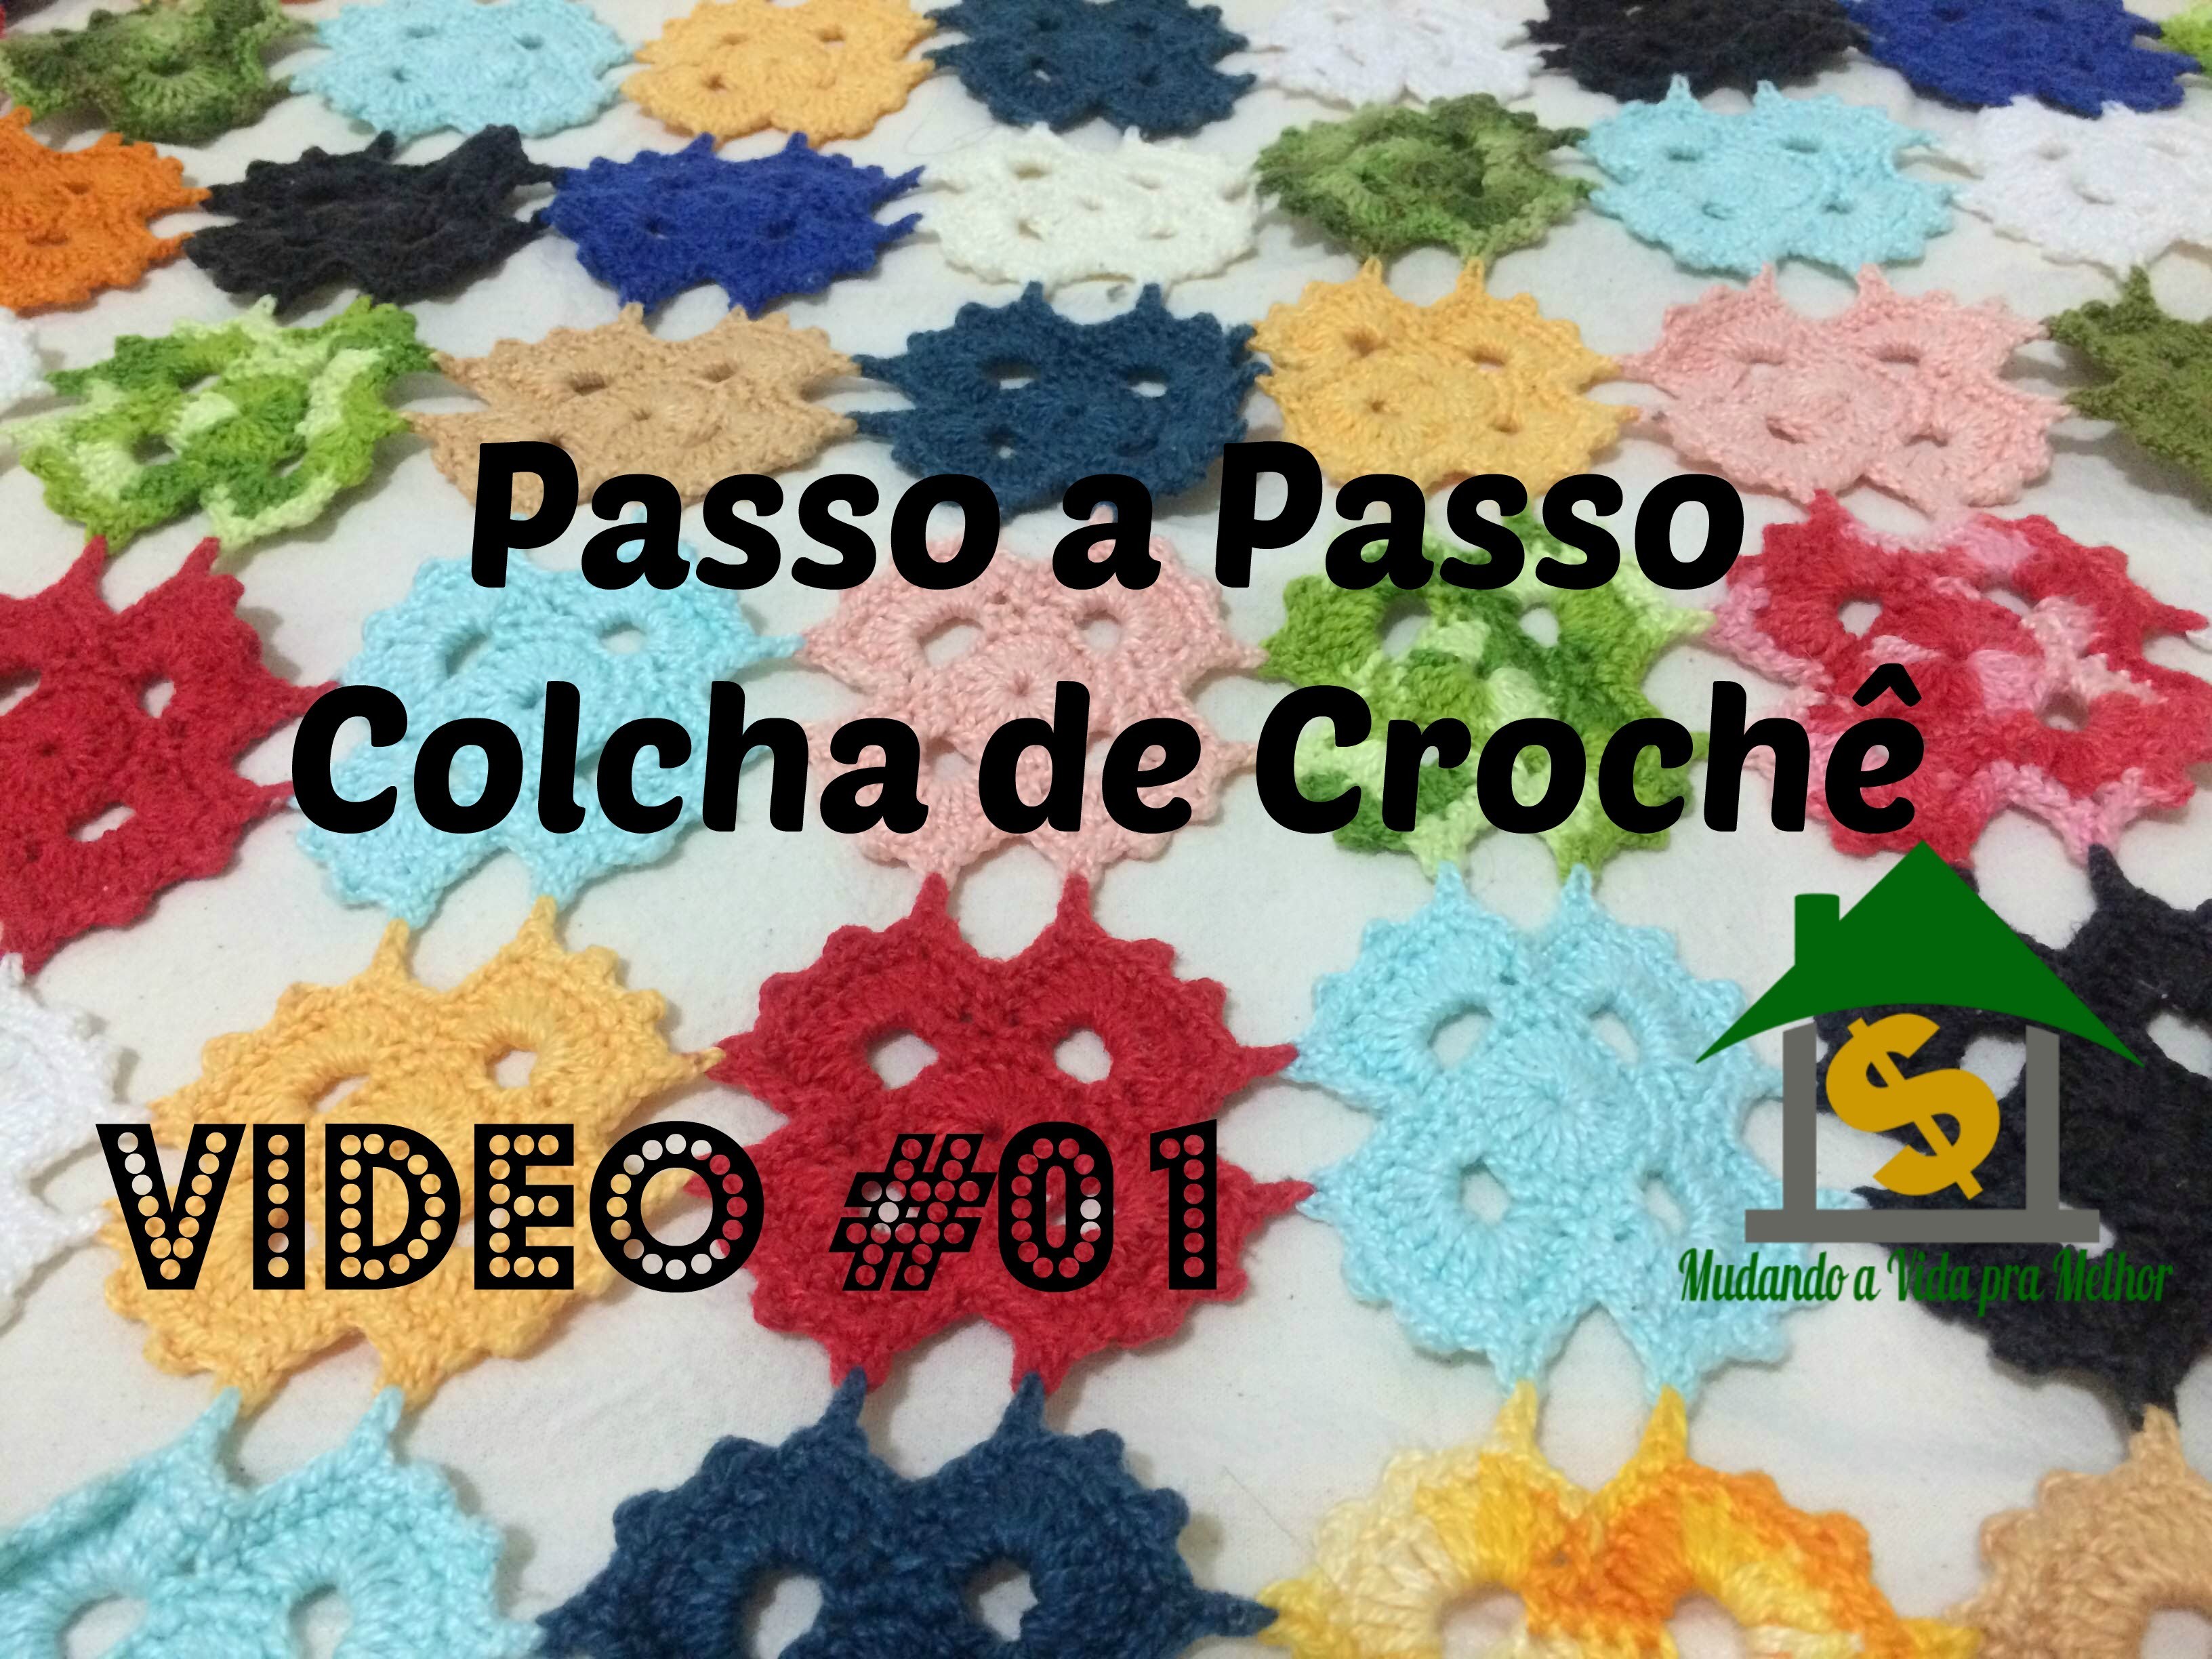 Colcha de Croche Vídeo #01